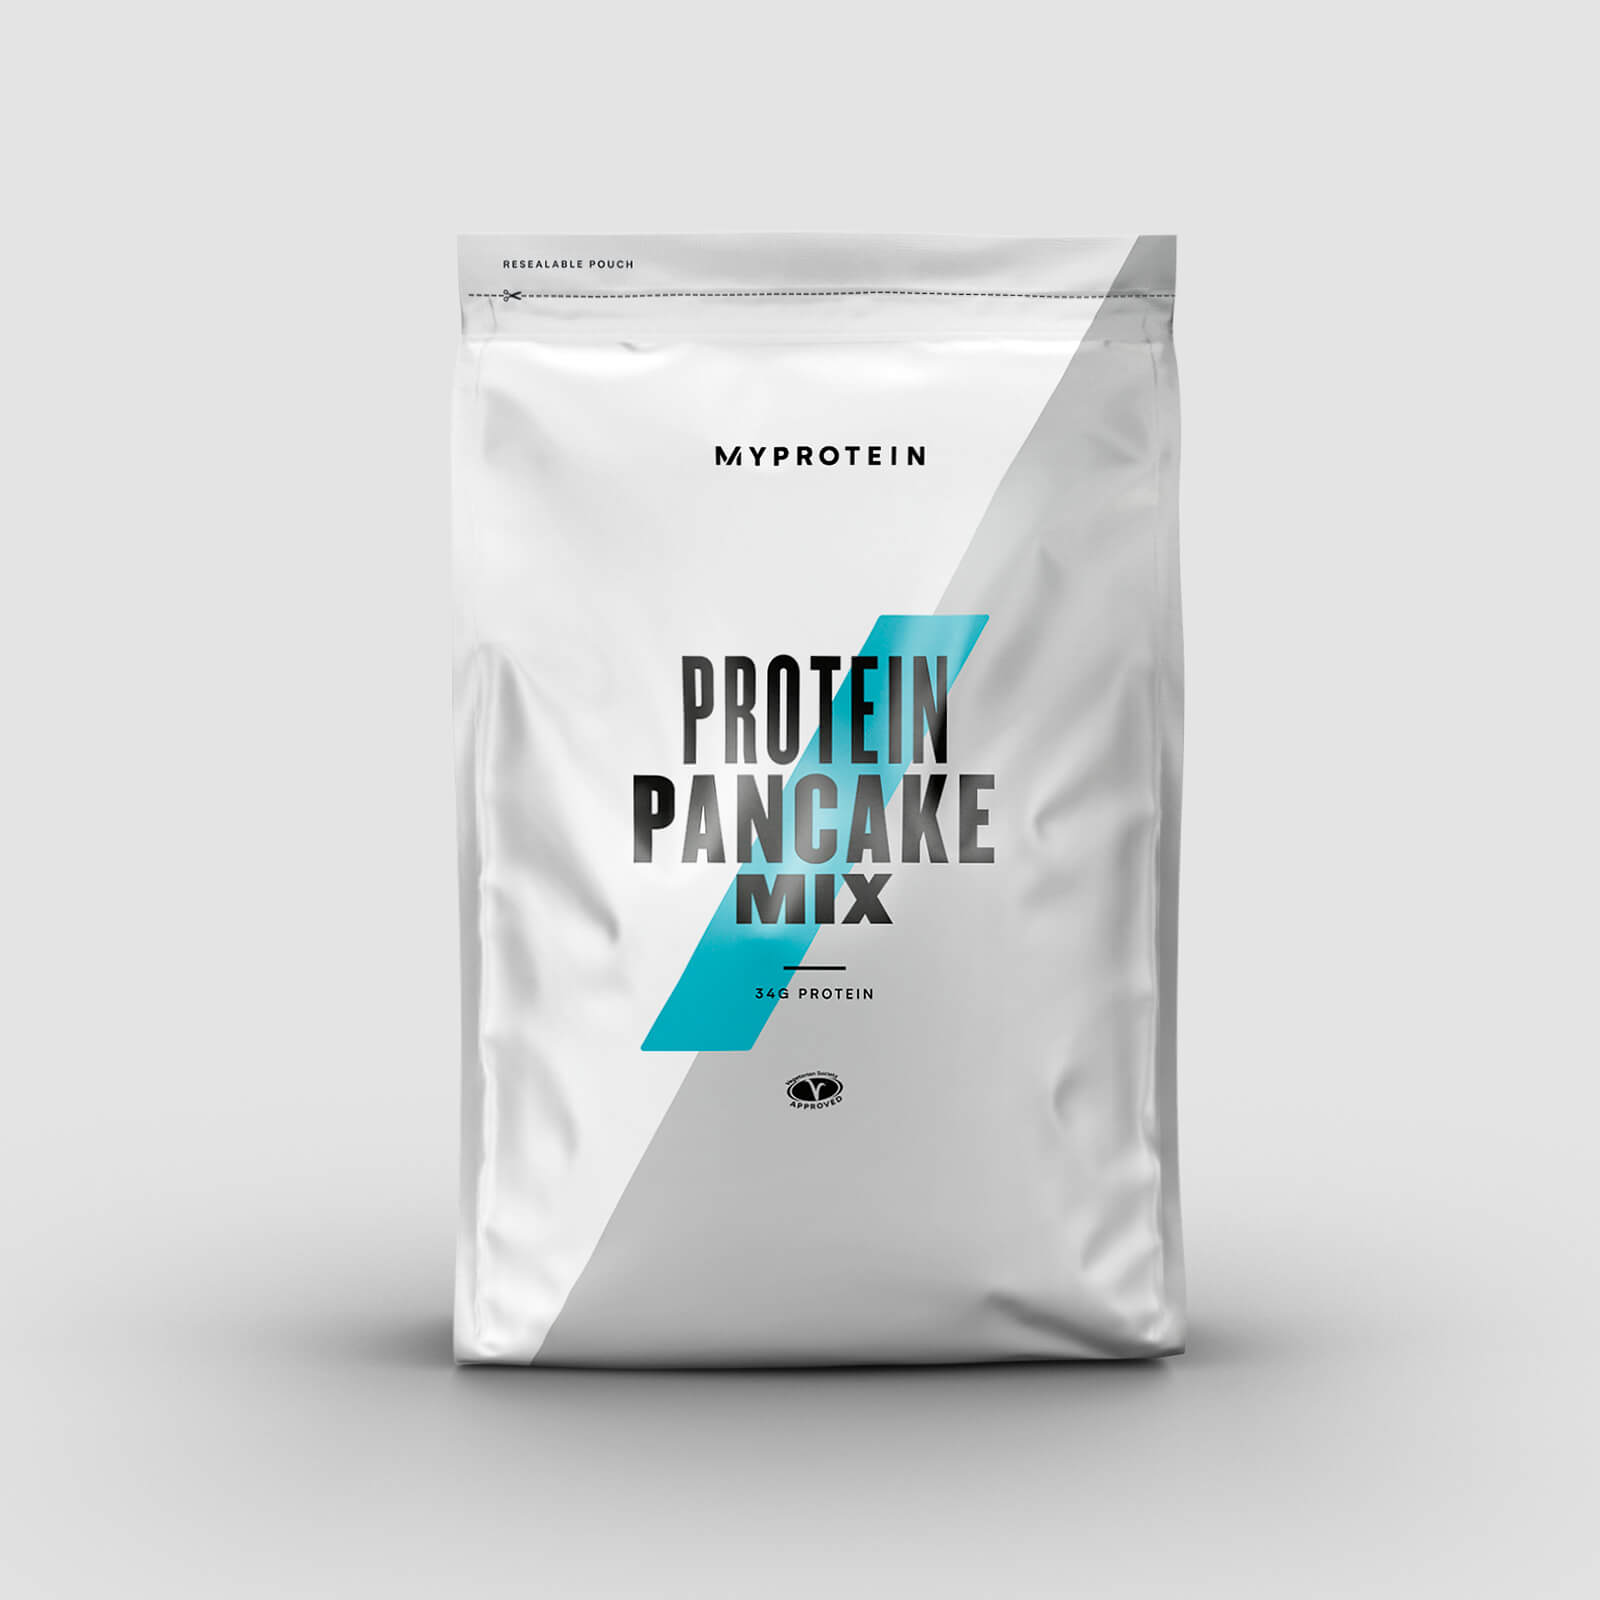 Protein Pancake Mix (โปรตีนแพนเค้ก) - 500g - ไม่มีรสปรุ่งแต่ง